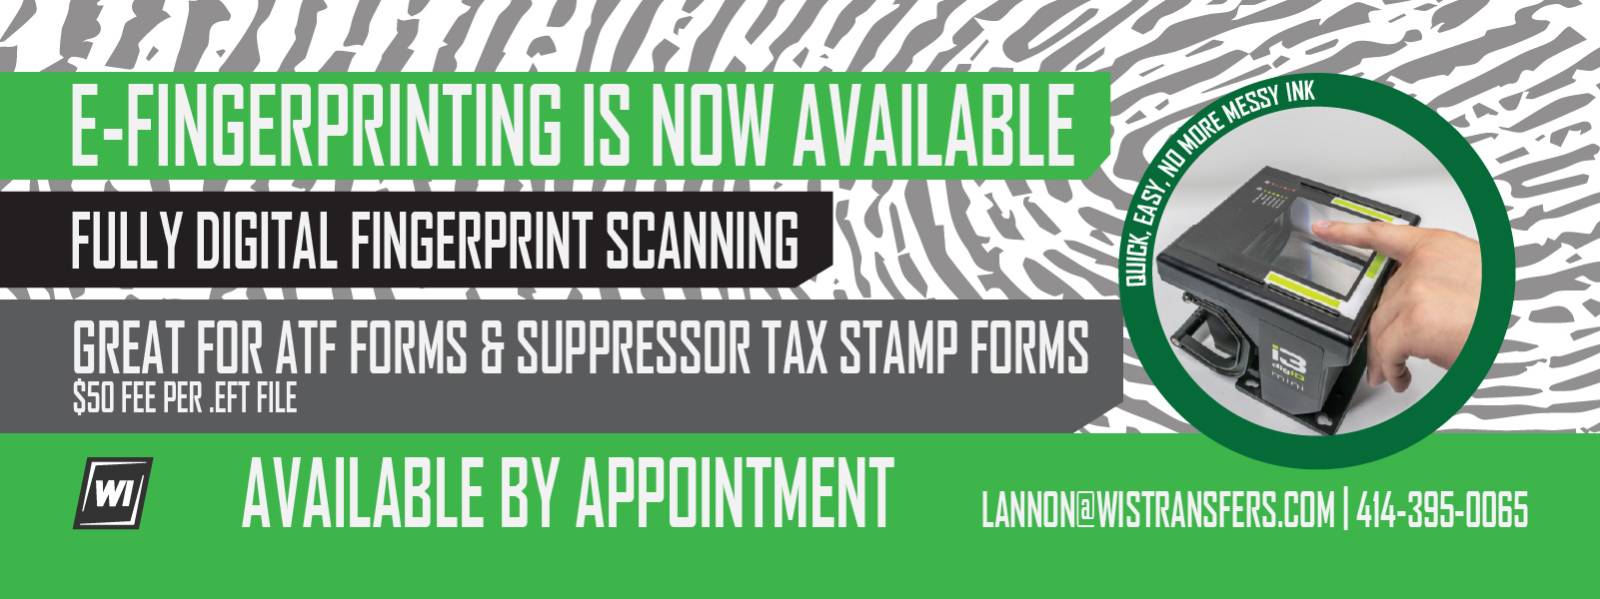 Digital Fingerprint Scanning Is Now Available